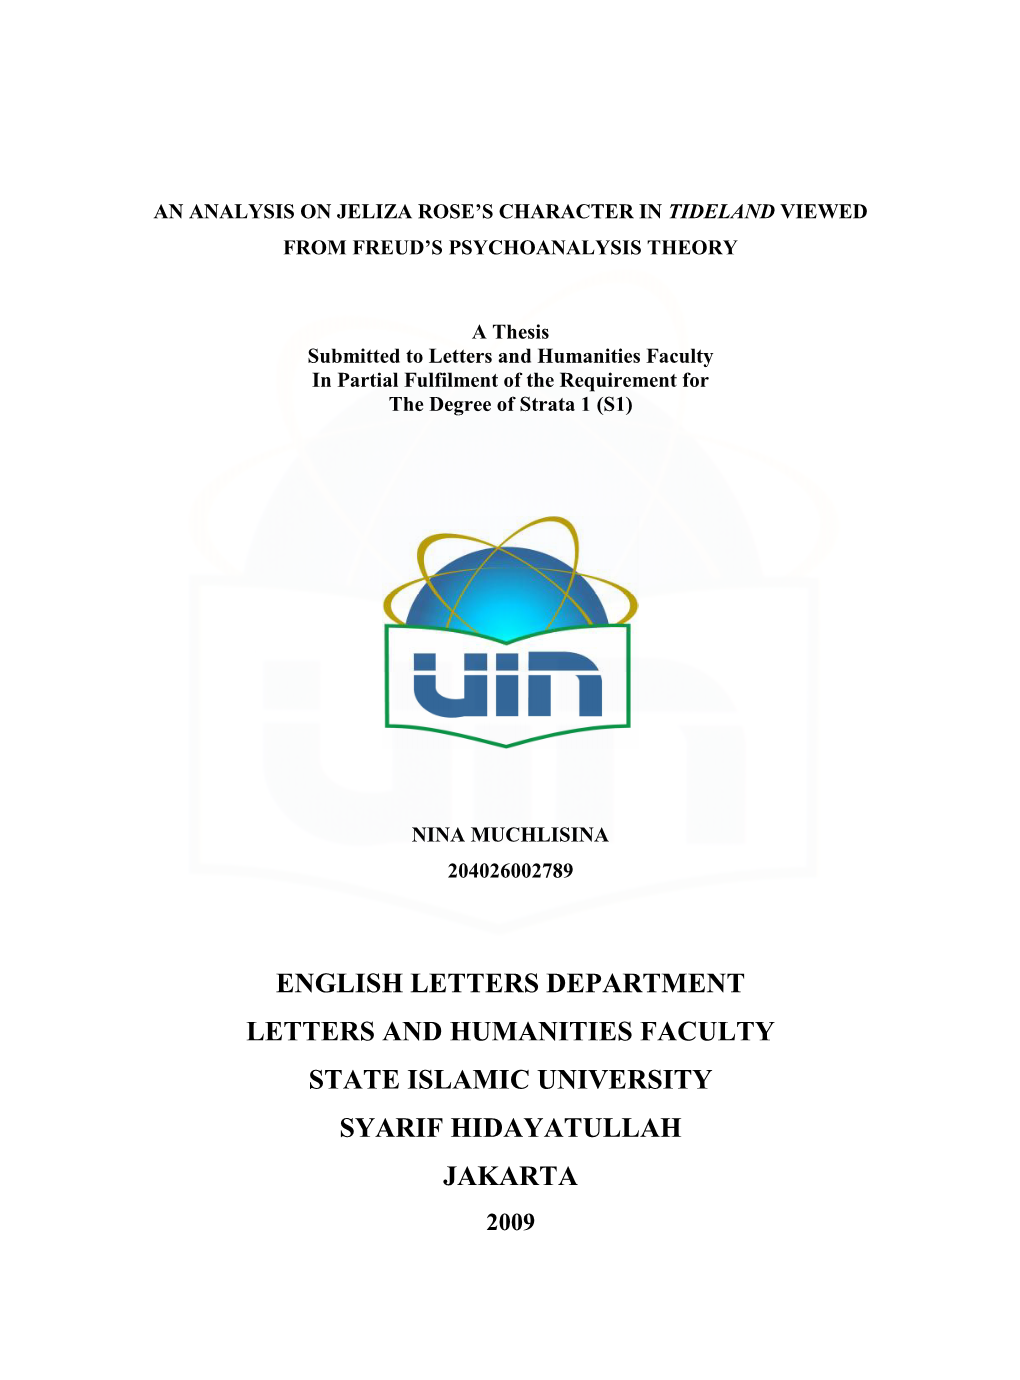 English Letters Department Letters and Humanities Faculty State Islamic University Syarif Hidayatullah Jakarta 2009 1